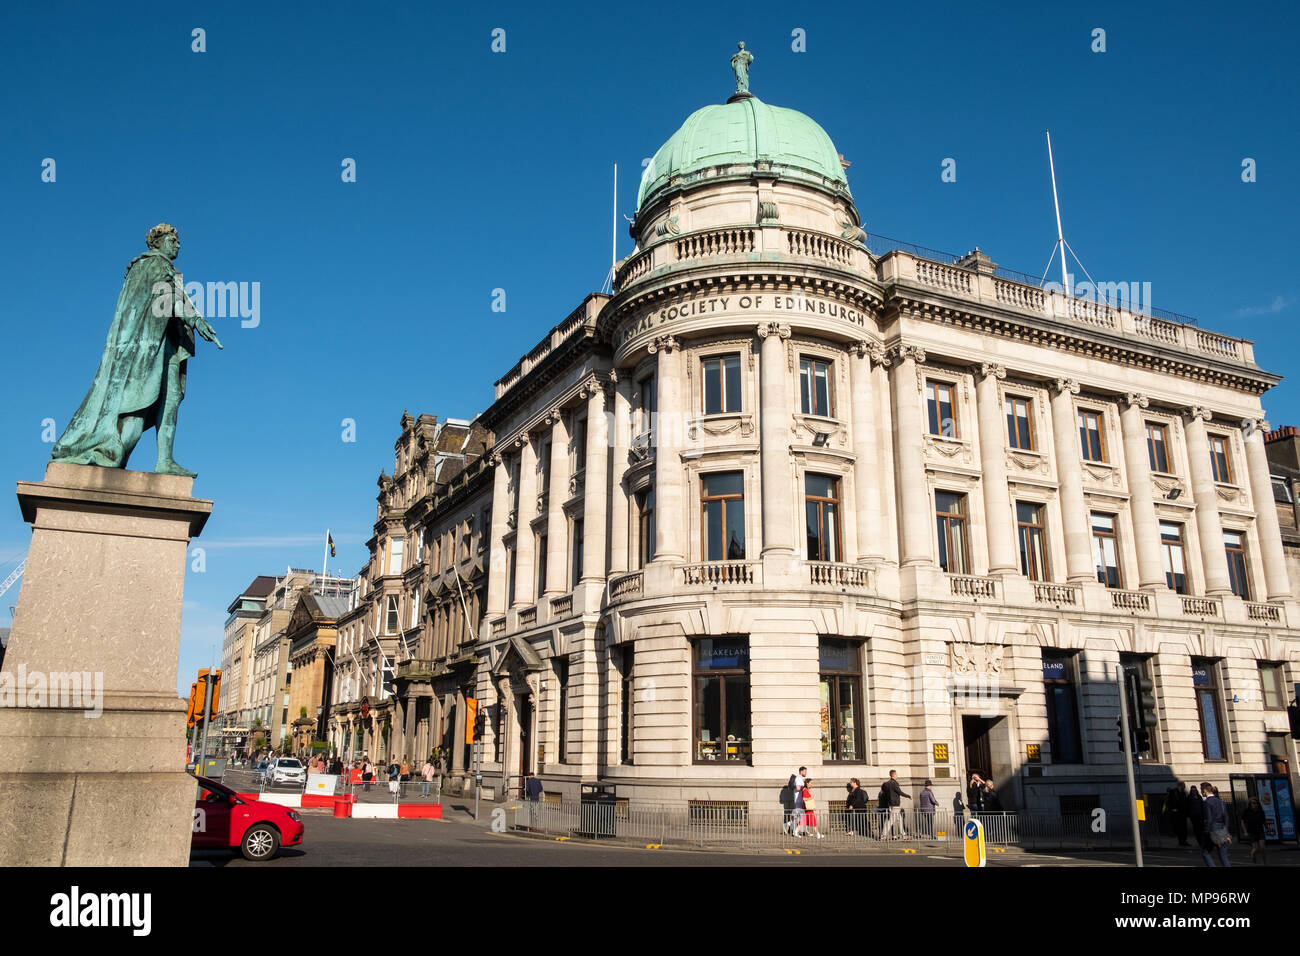 View of The Royal Society of Edinburgh building on George Street, In Edinburgh, Scotland, United Kingdom, UK Stock Photo